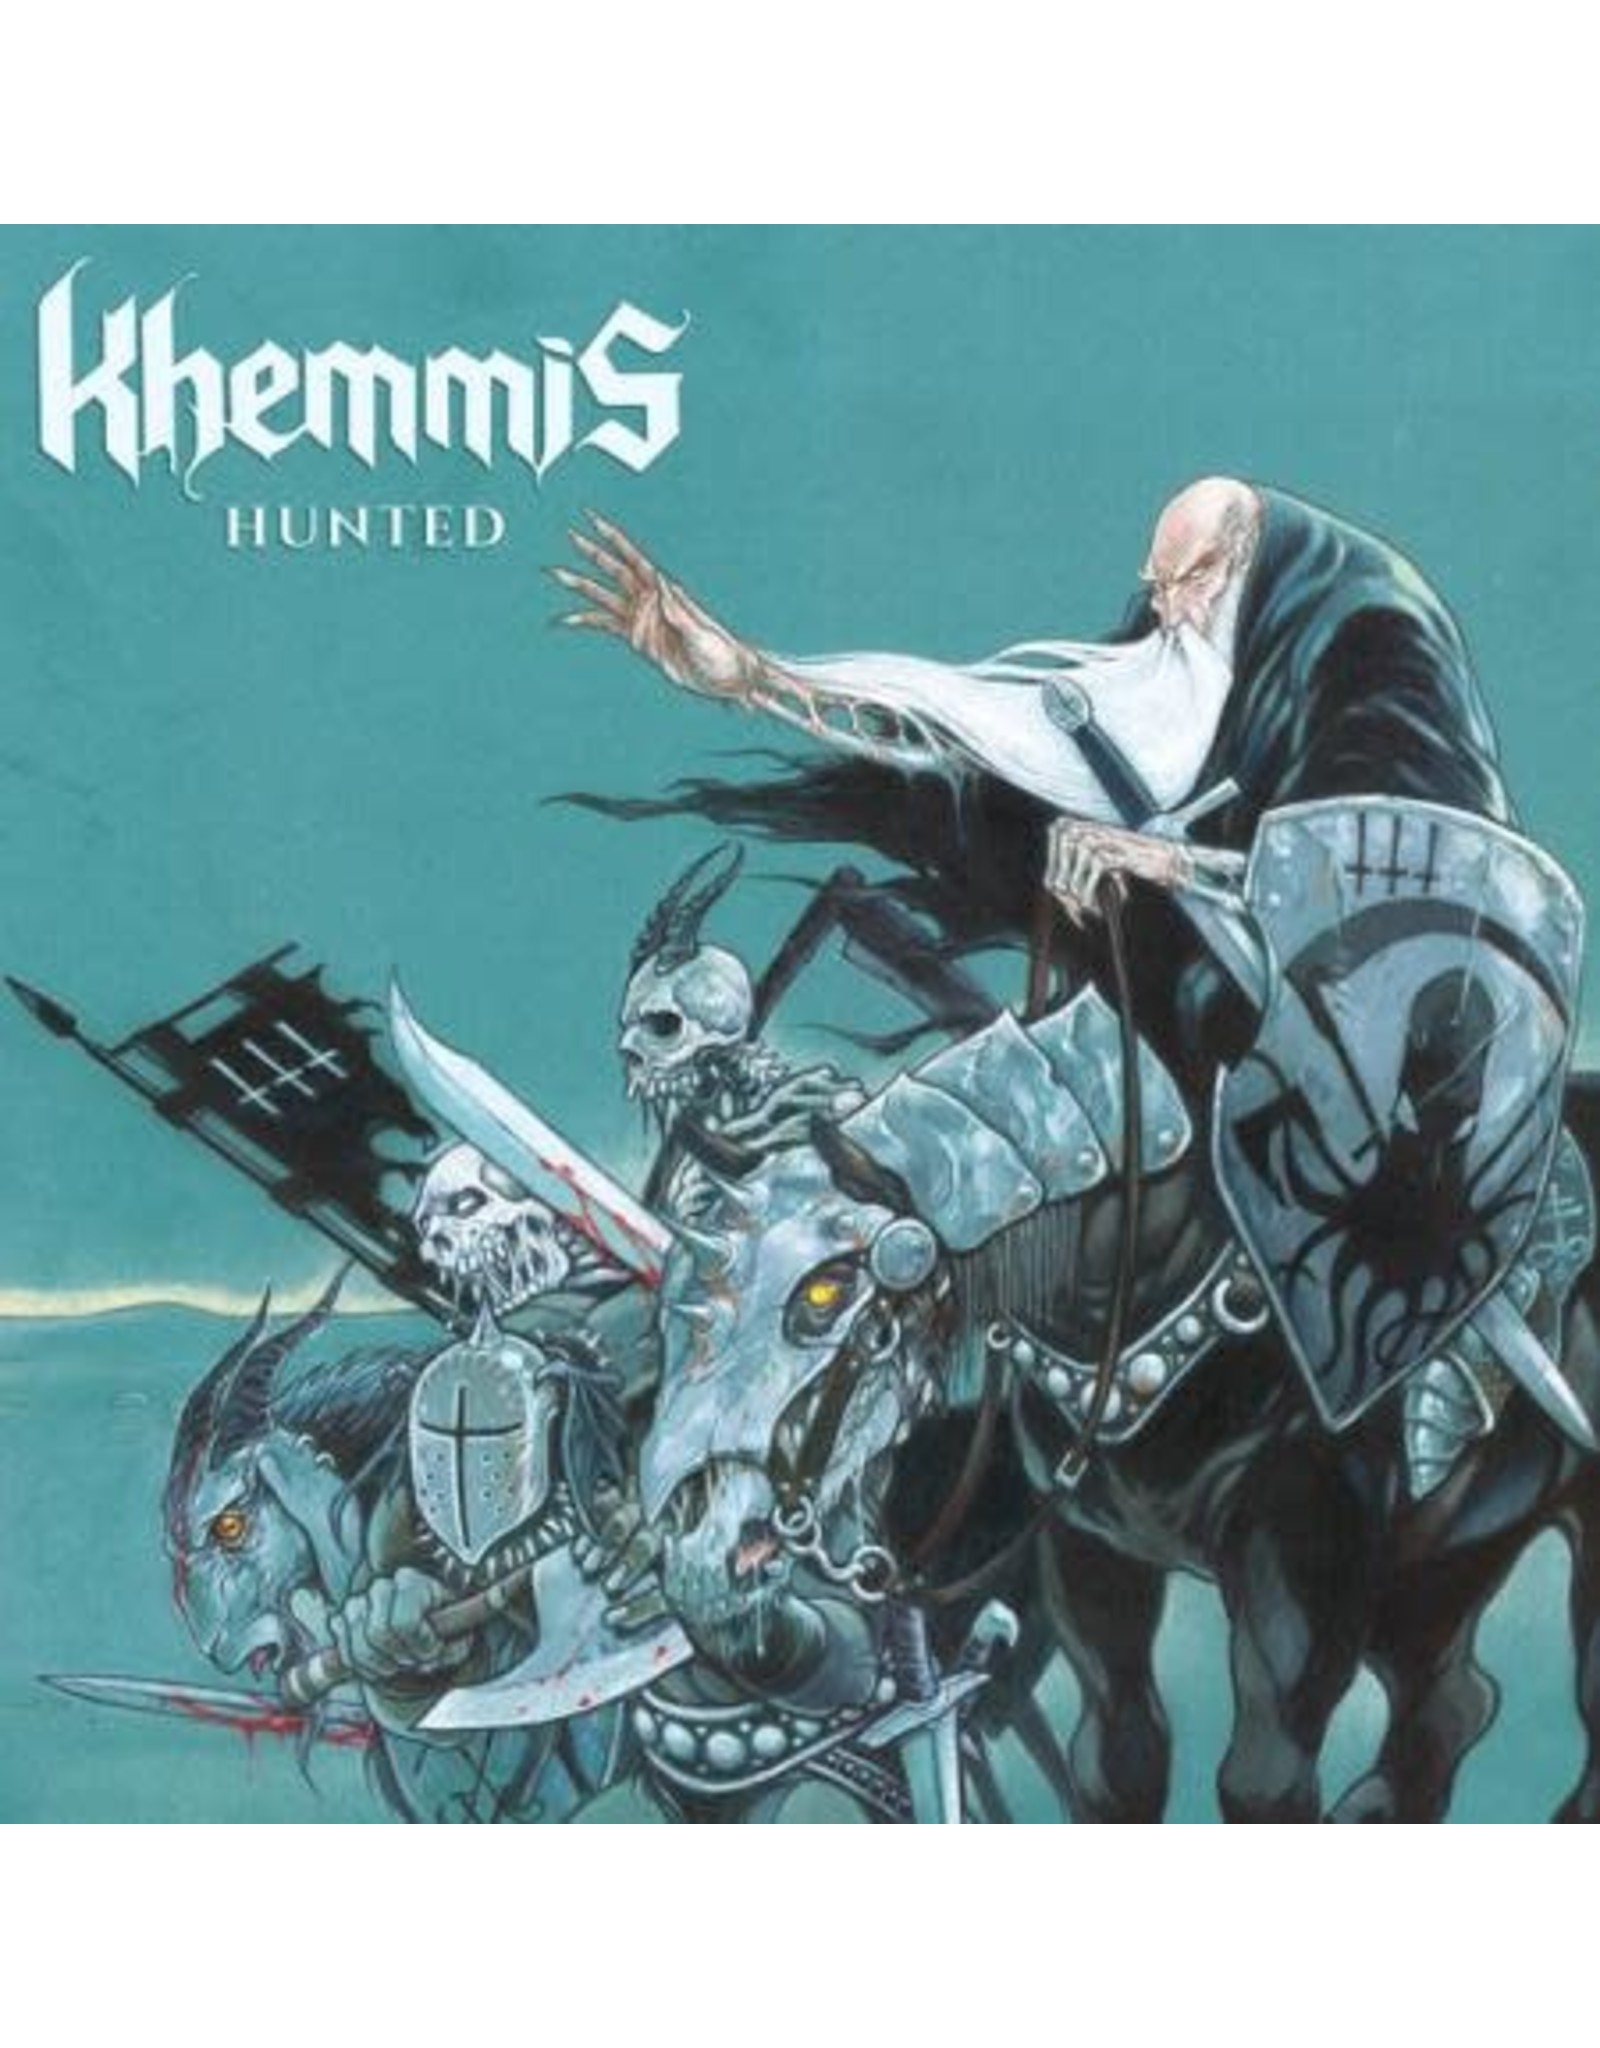 New Vinyl Khemmis - Hunted LP